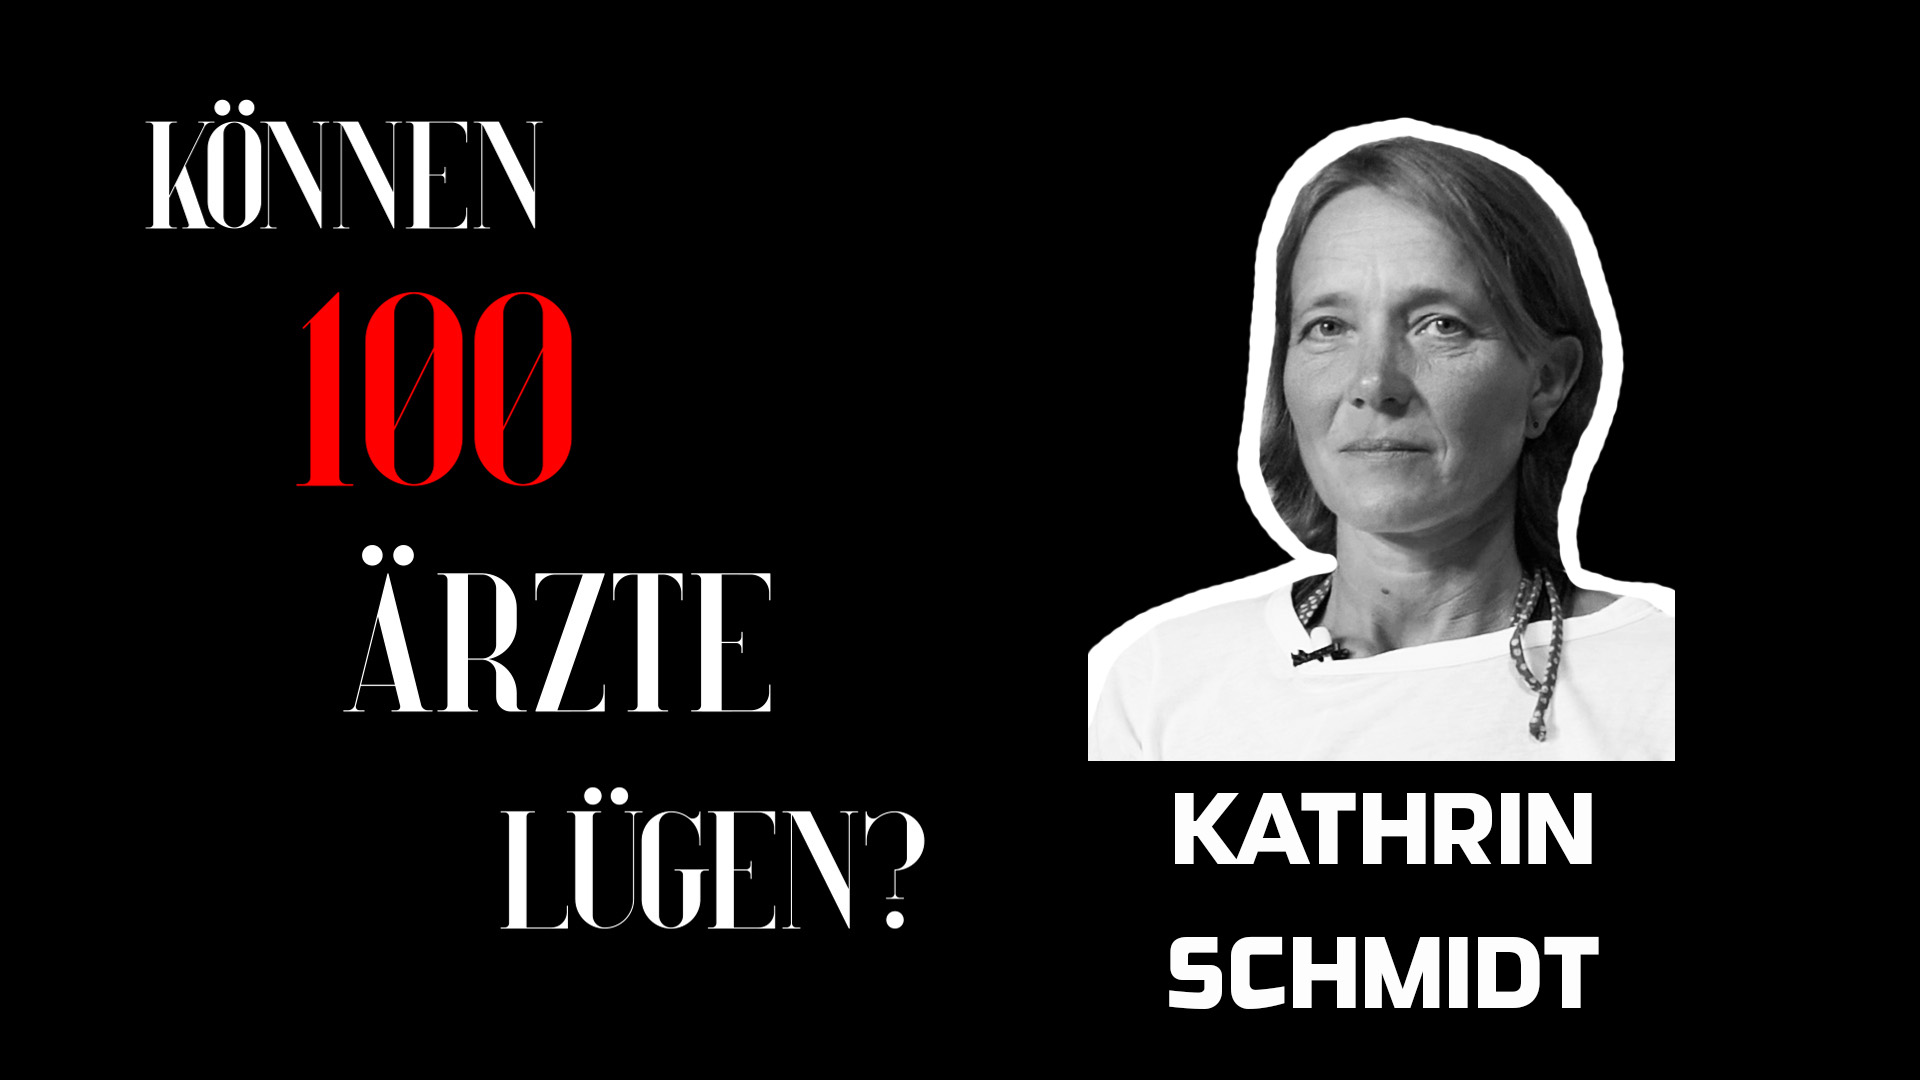 Kathrin Schmidt